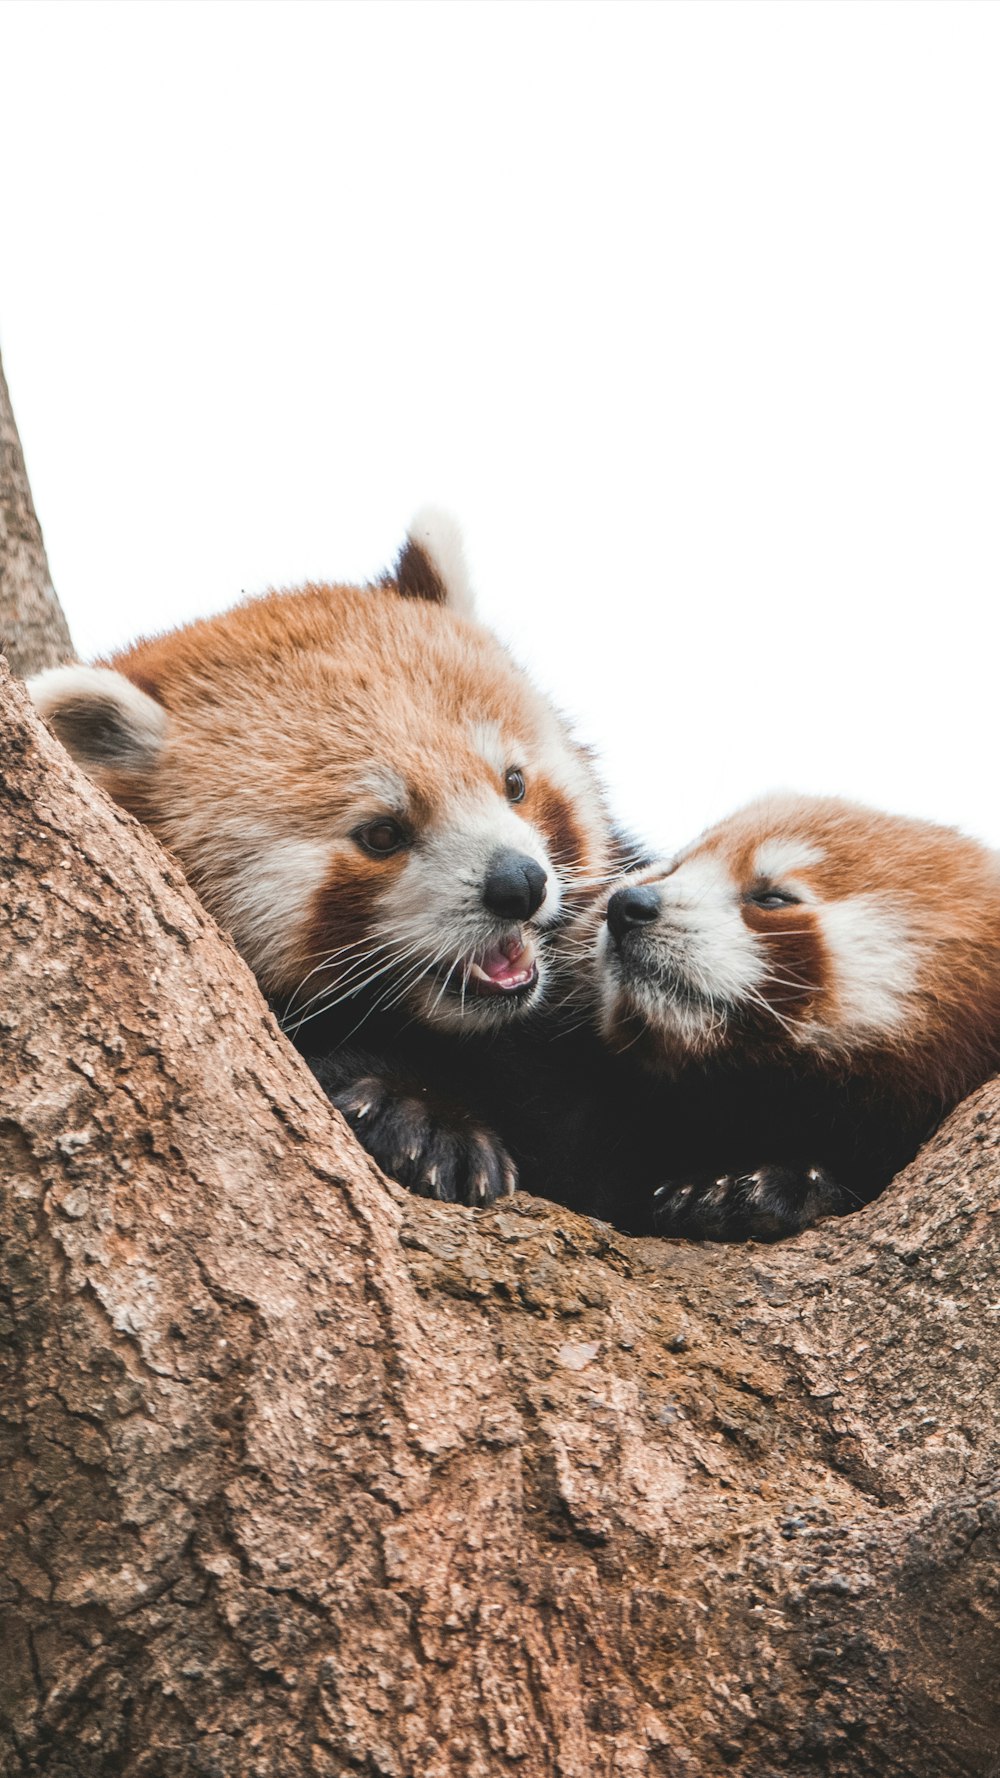 due panda rossi